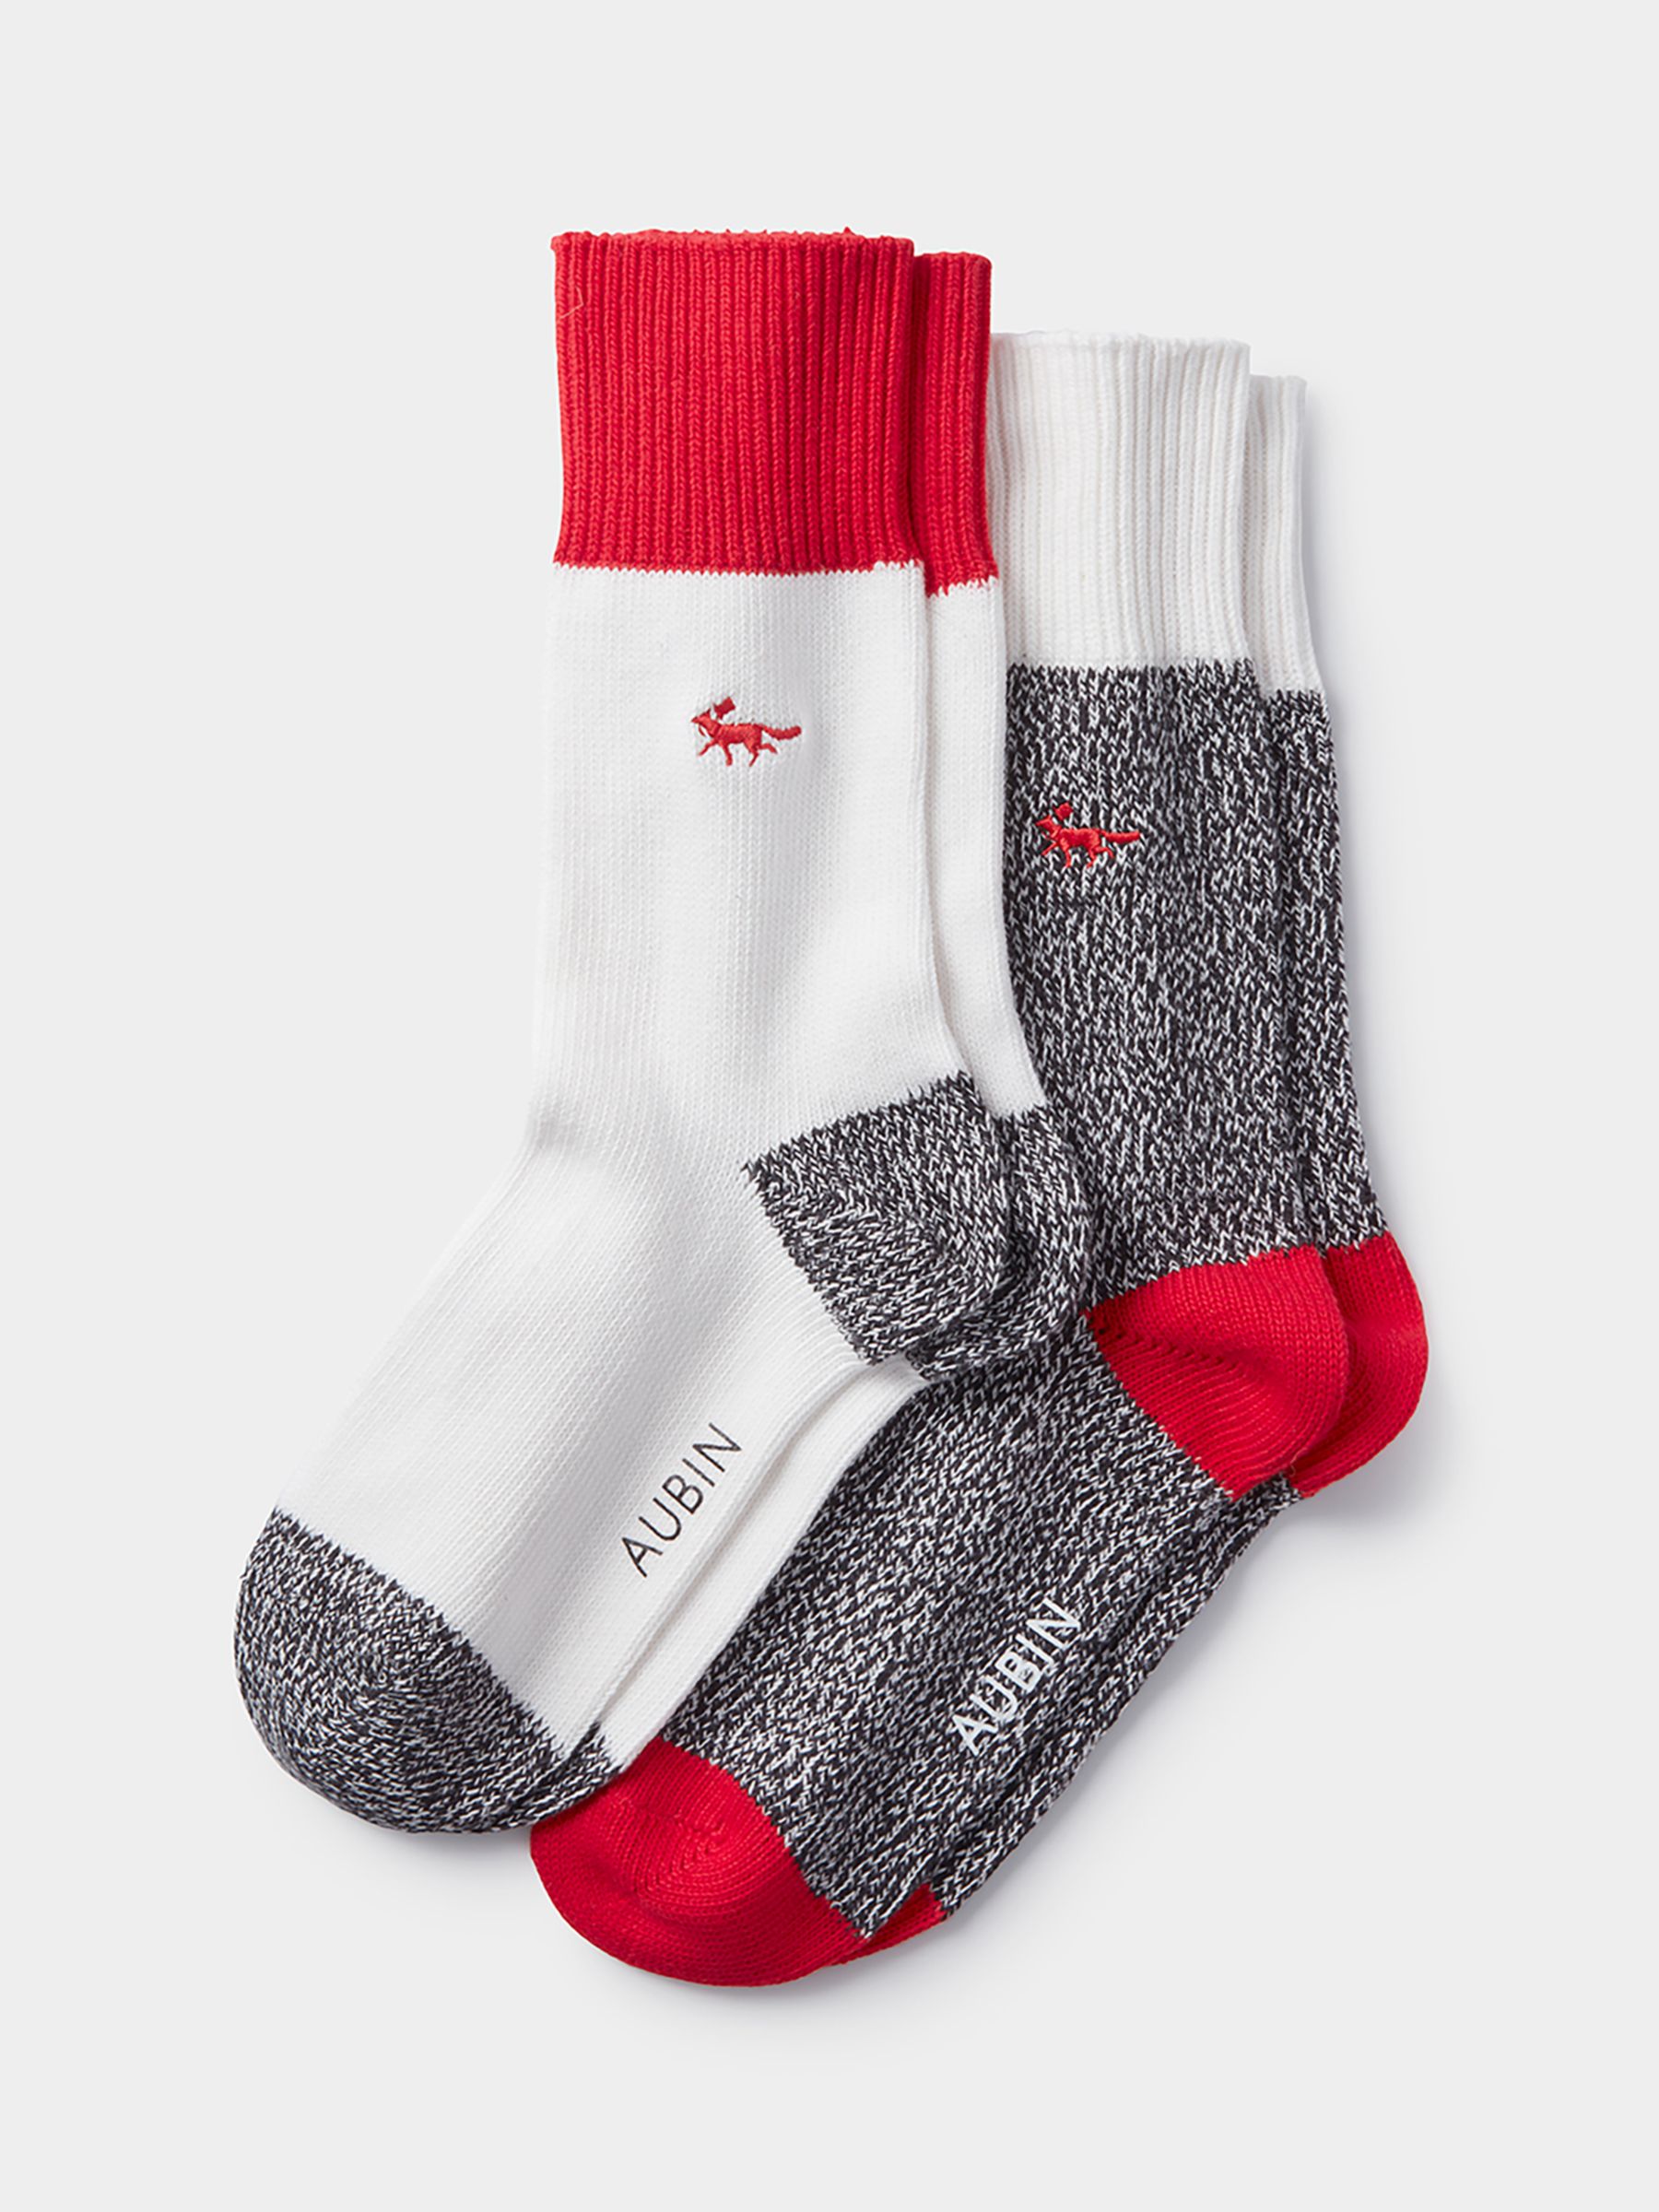 Aubin Fowey Colour Block Socks, Pack of 2, Grey/Multi, One Size